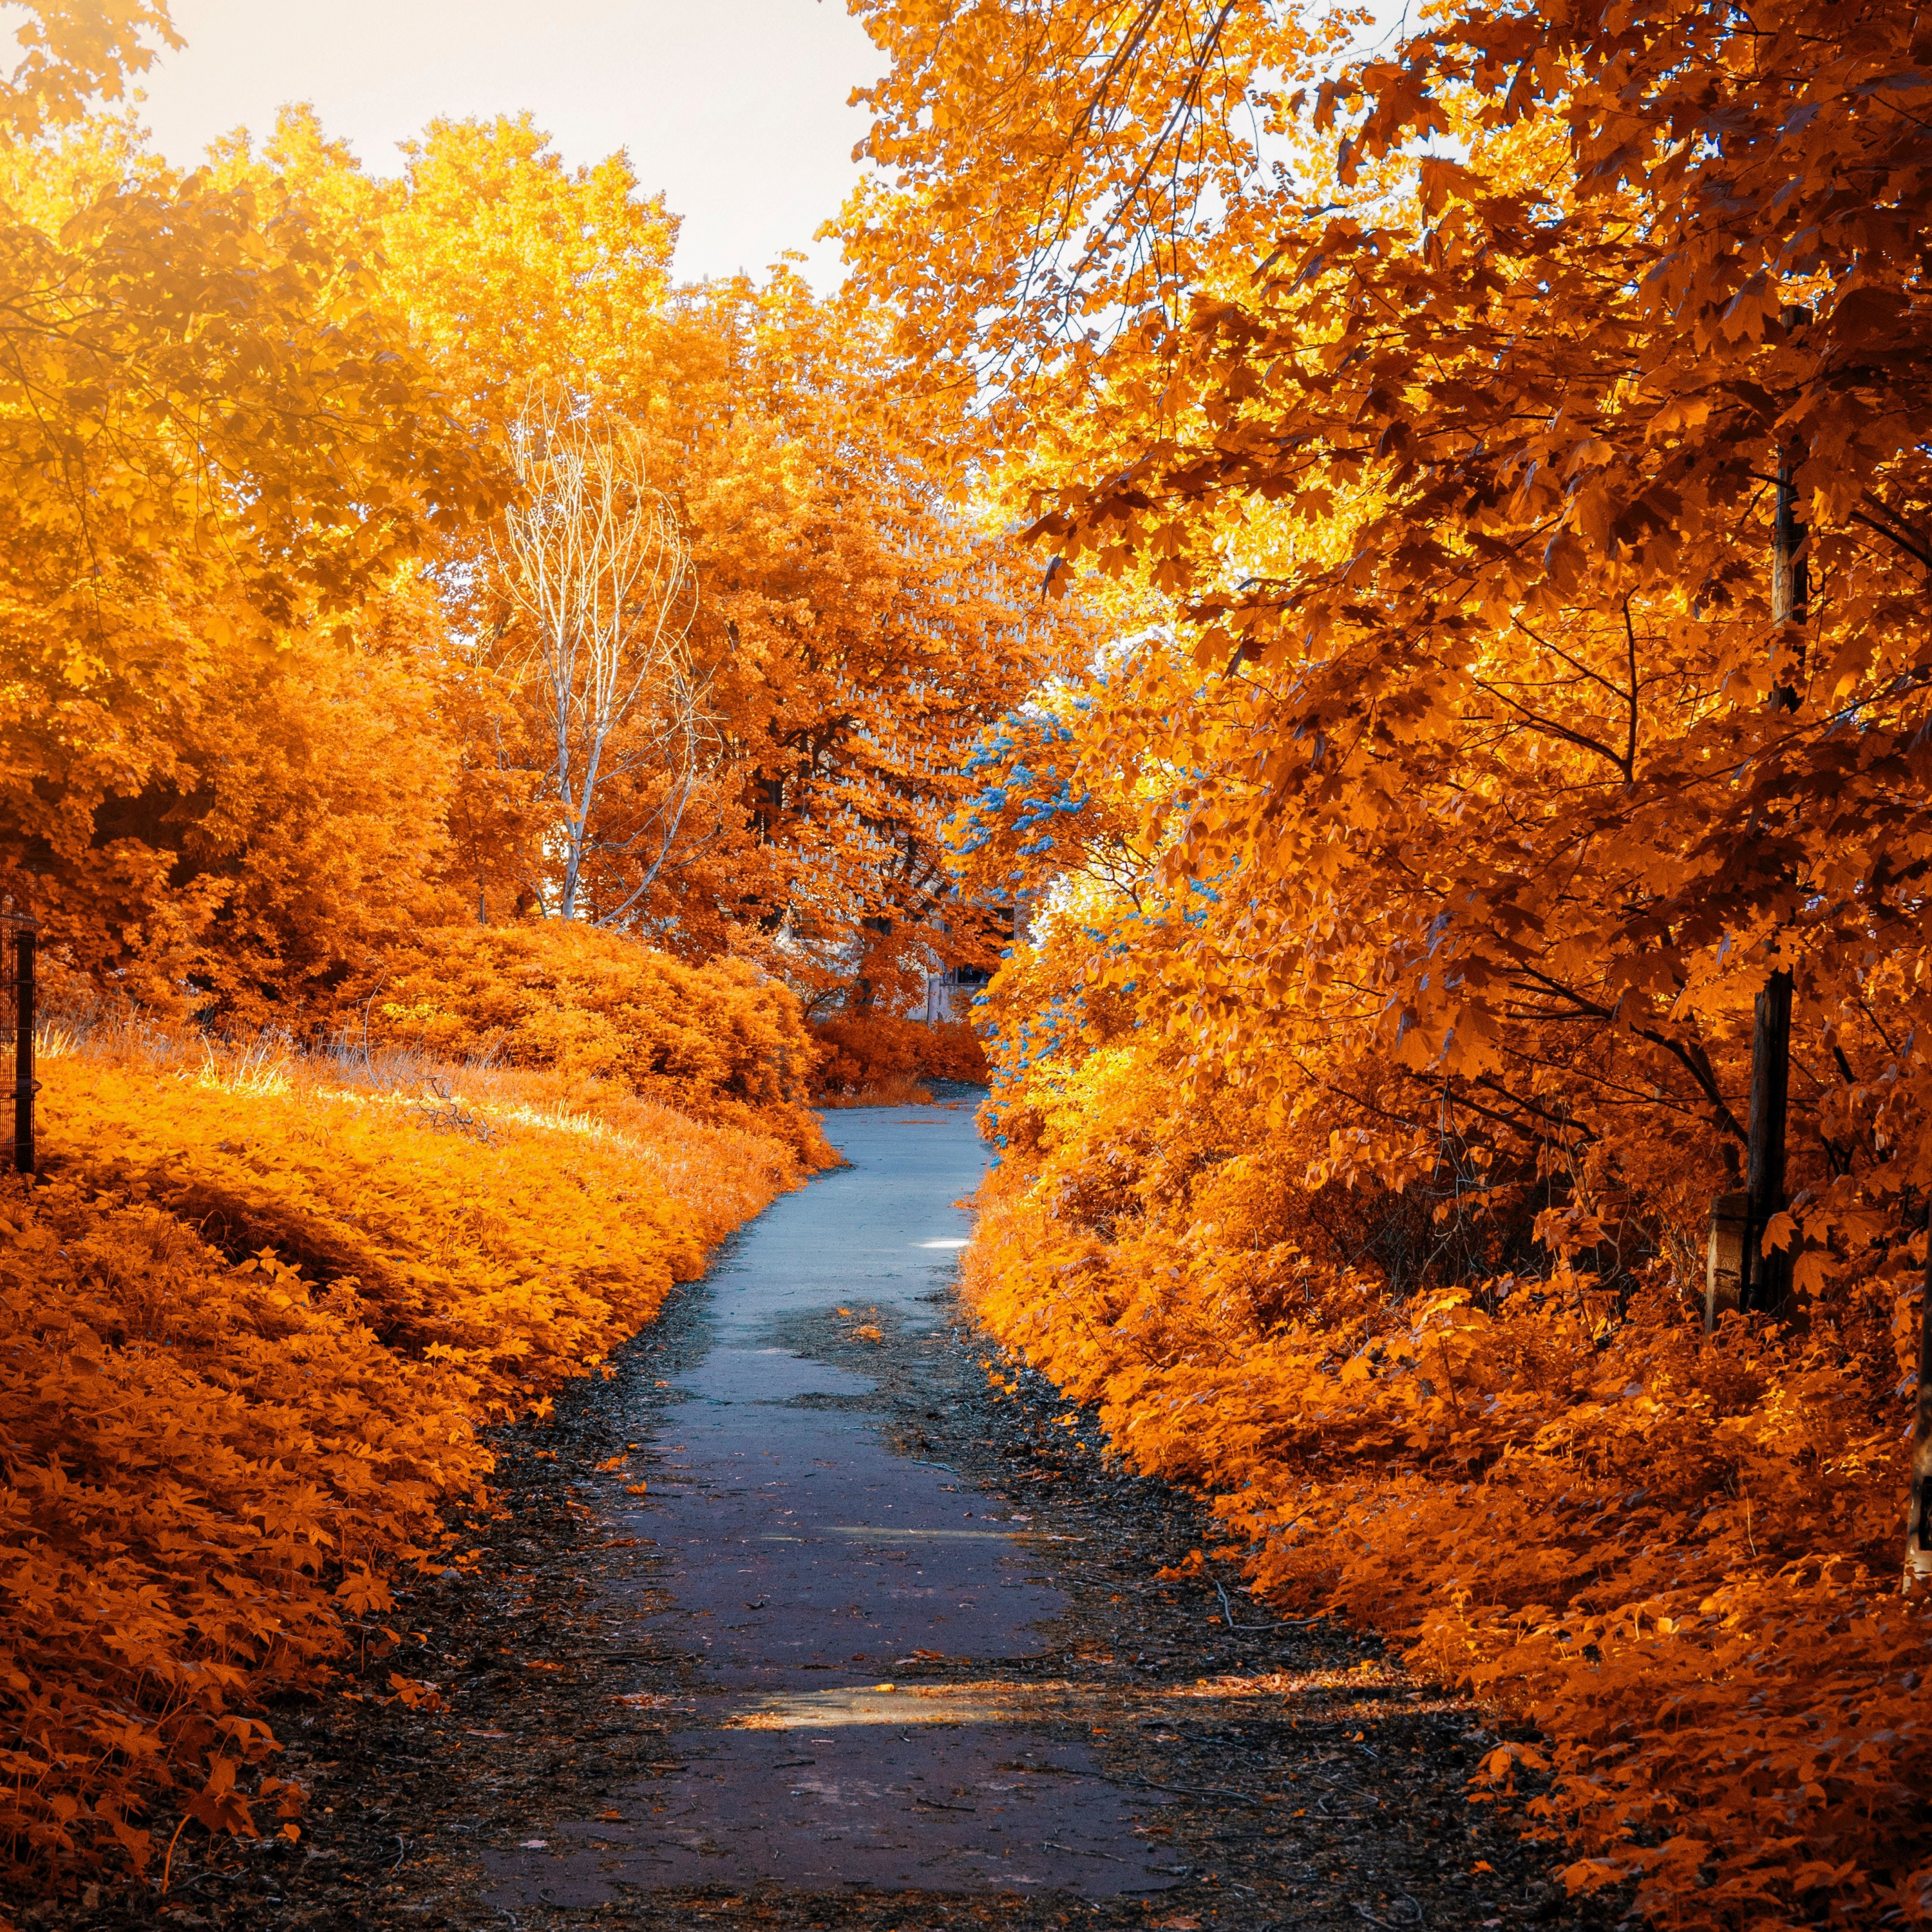 Download wallpaper 2932x2932 park, trees, foliage, autumn, pathway, leaves, ipad pro retina, 2932x2932 HD background, 15327